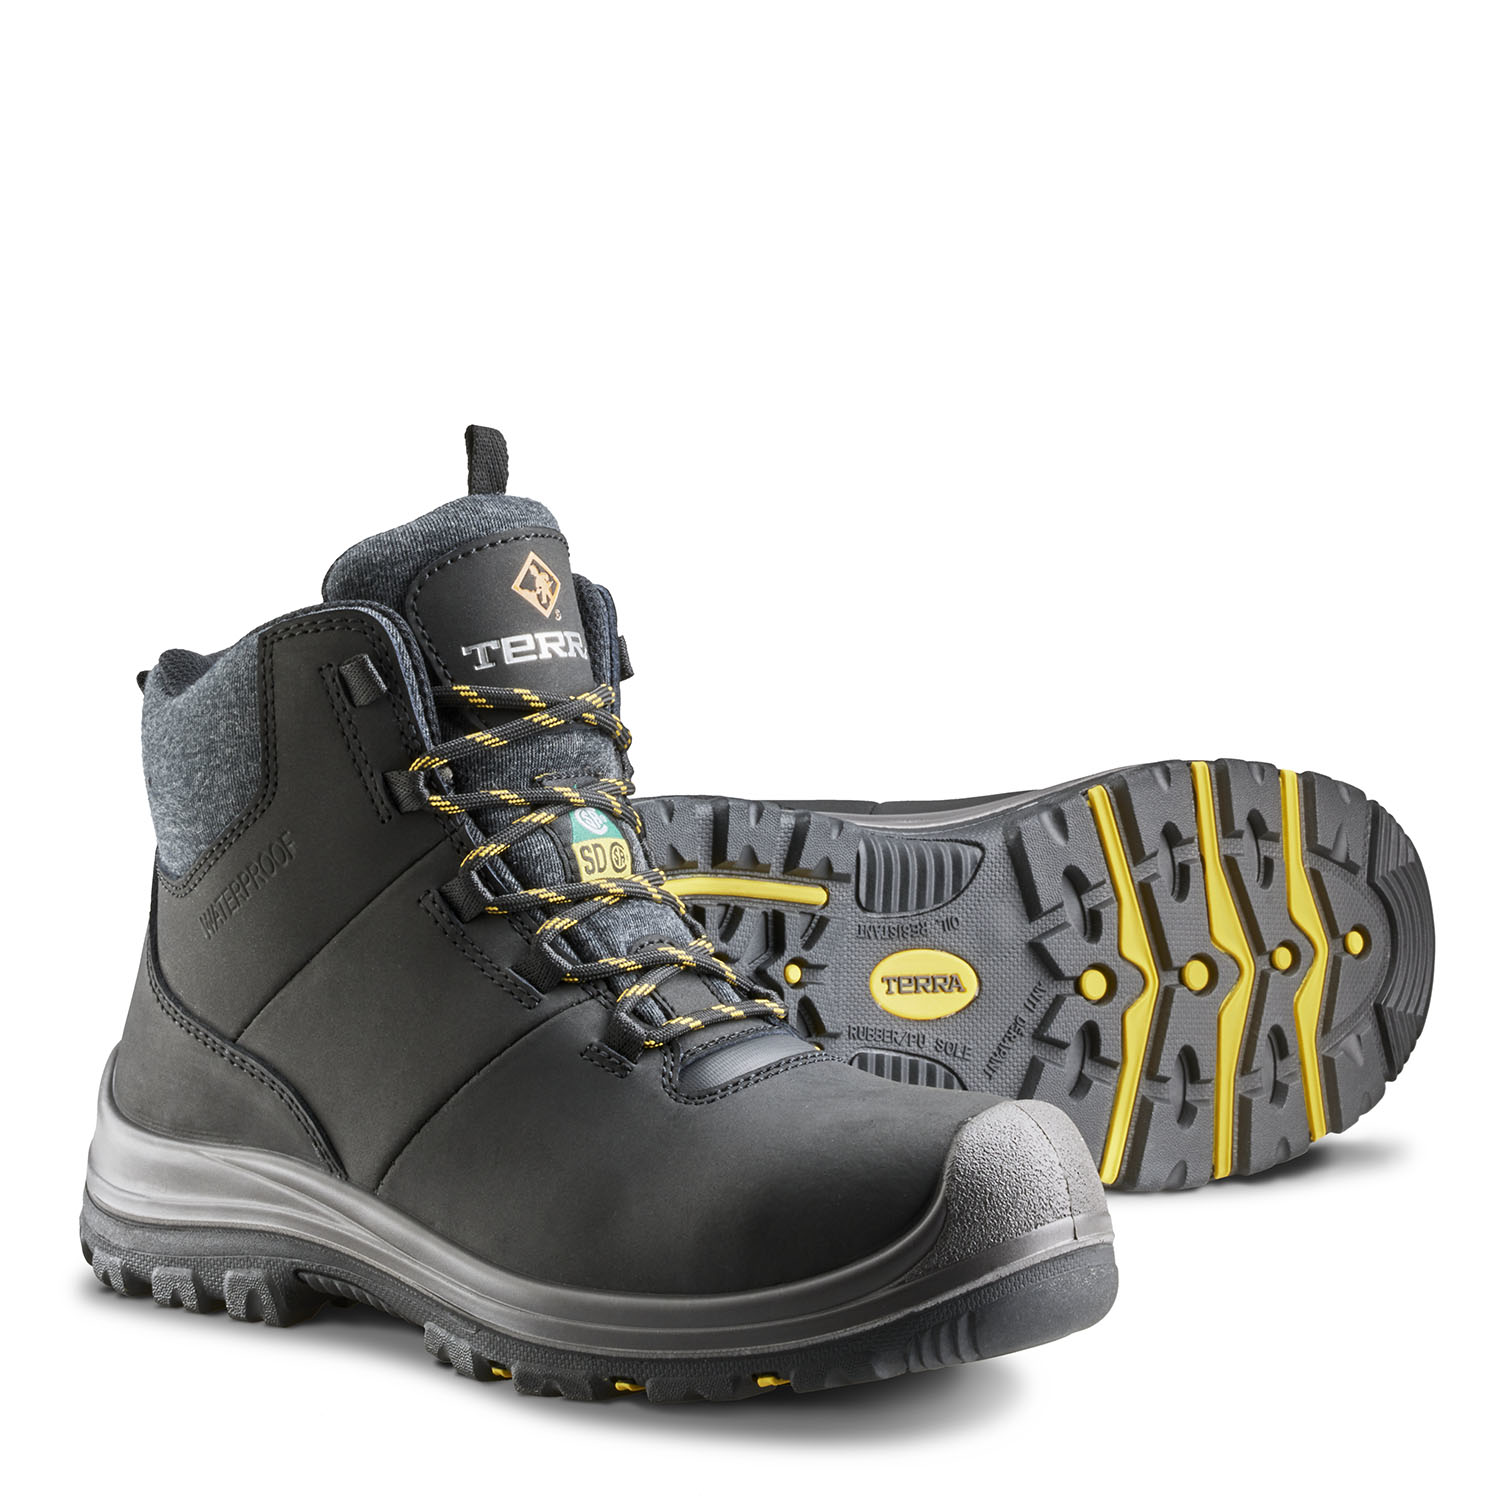 New, TERRA TR305205BLK Findlay Safety Toe Boots / Shoes, Men's, Black, Size  11 | eBay